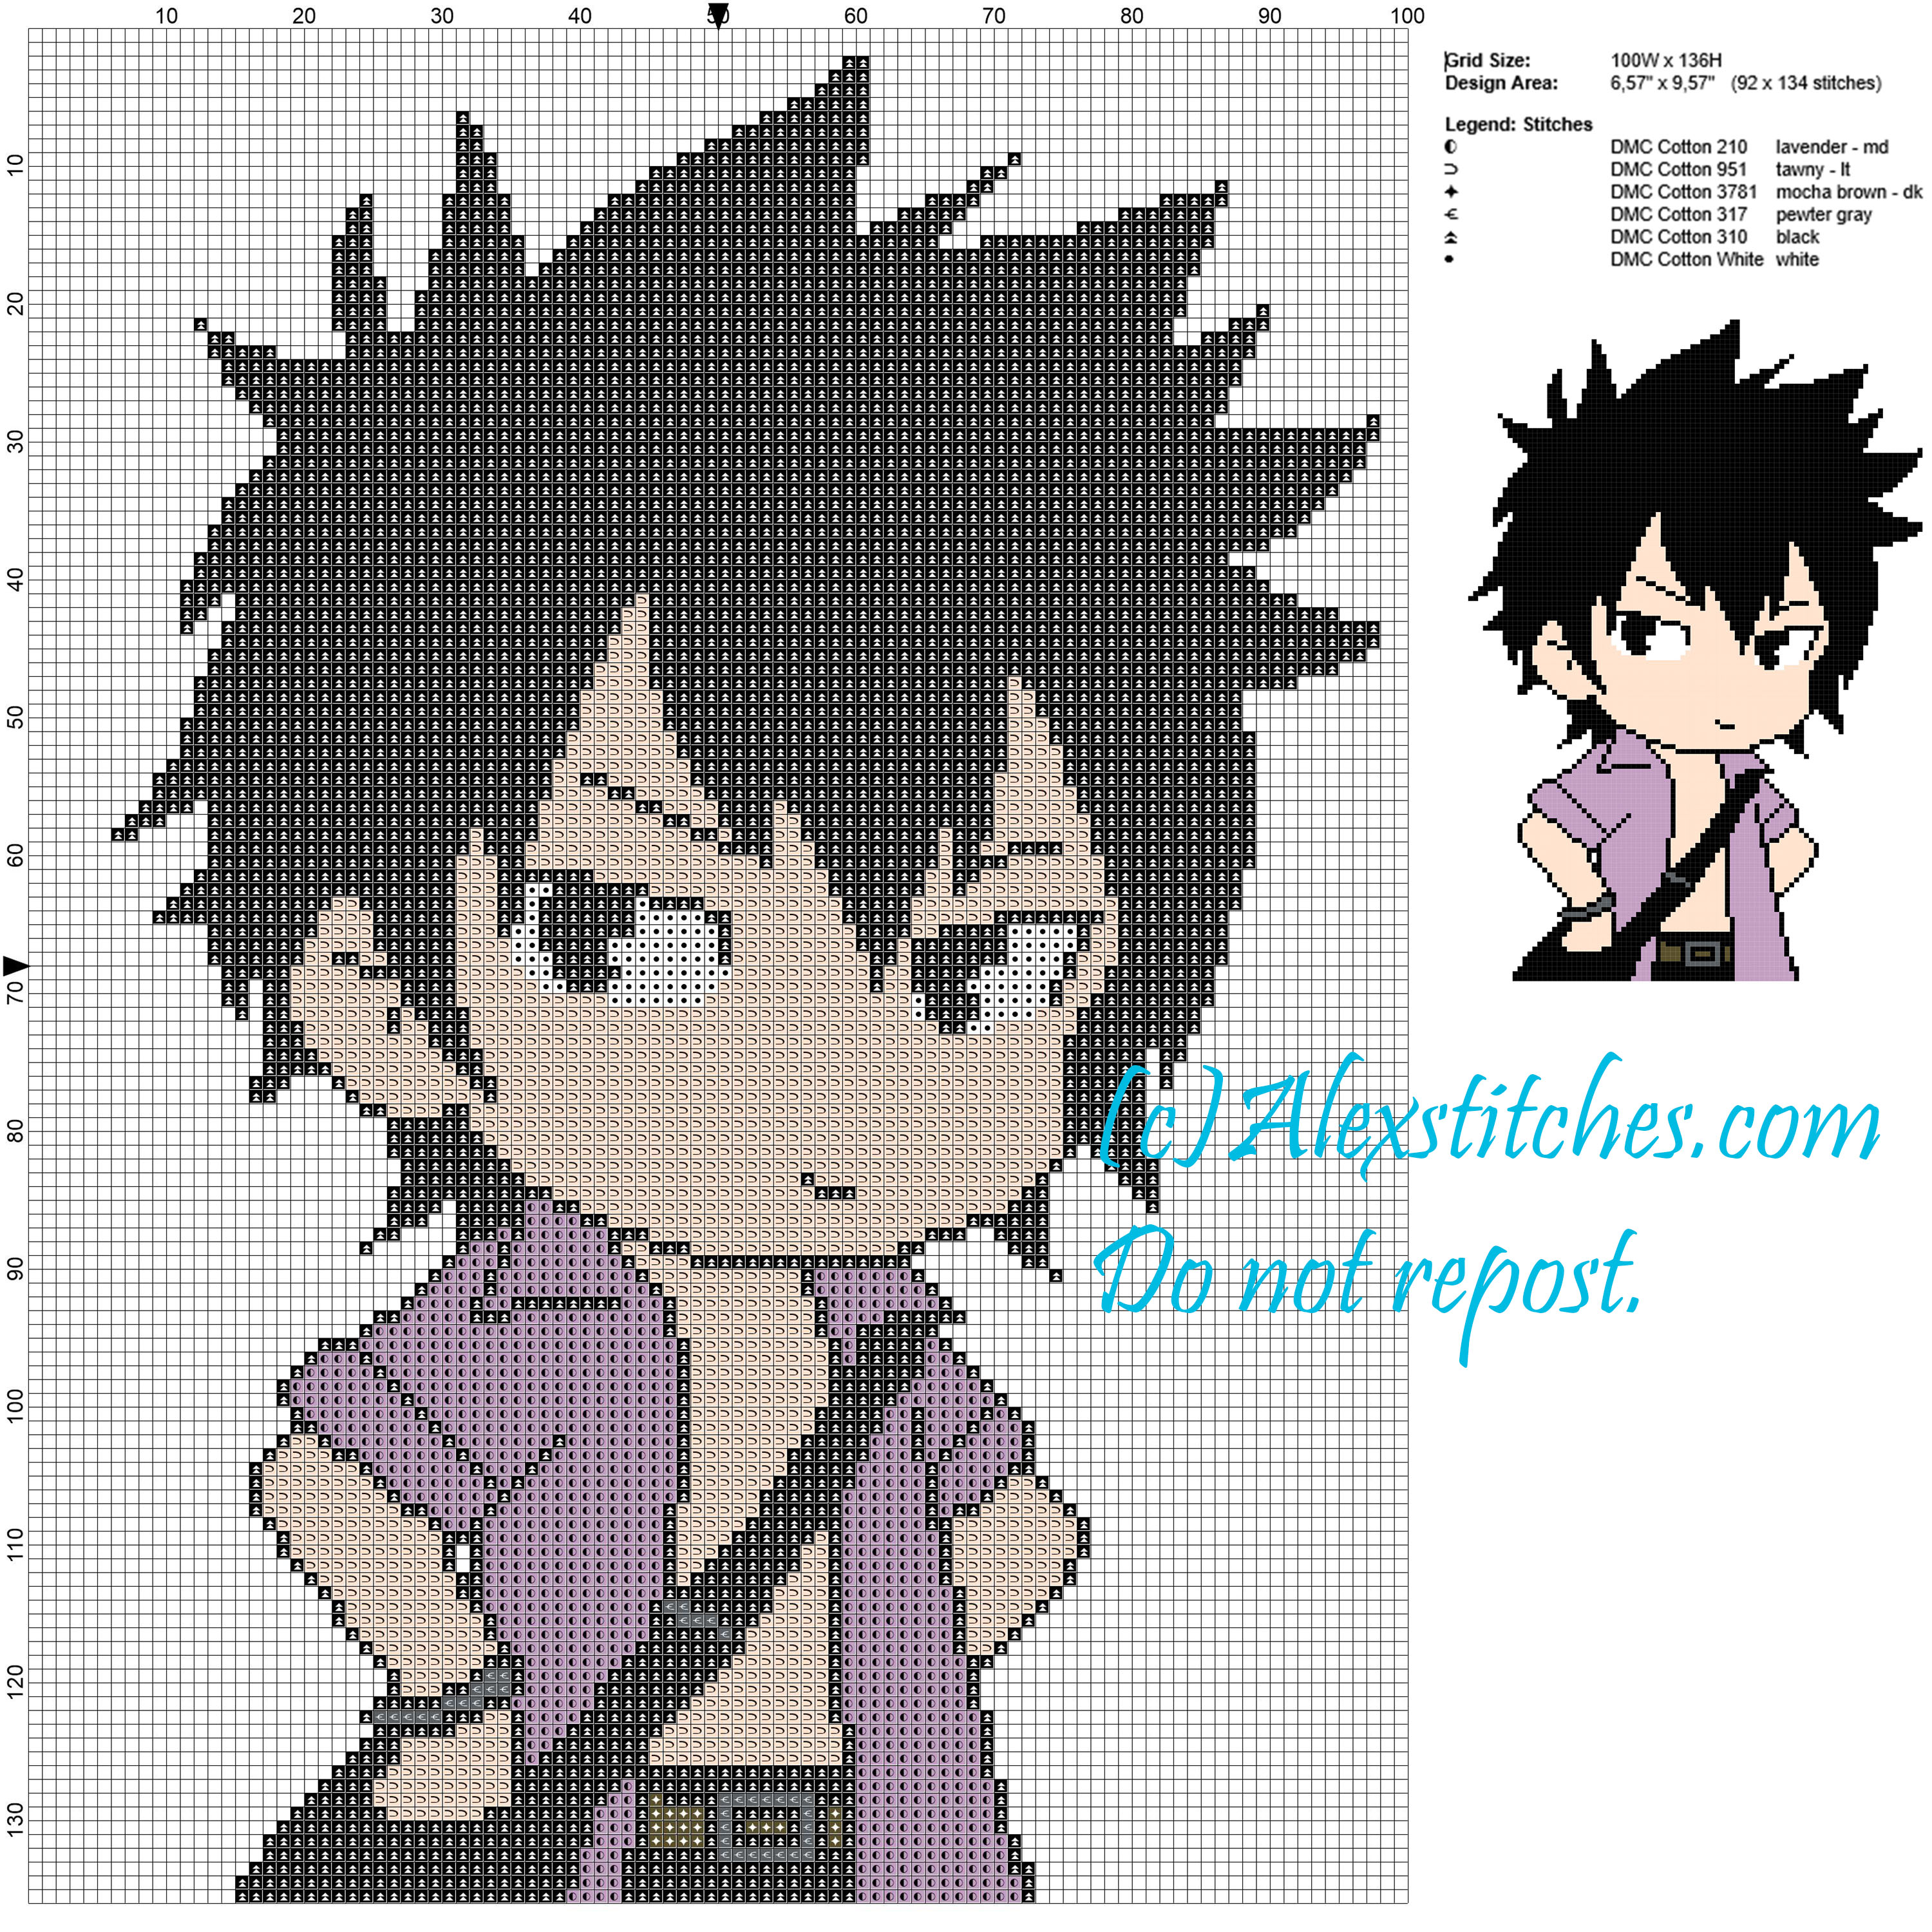 Gray (Fairy Tail) cross stitch pattern 100x136 6 colors